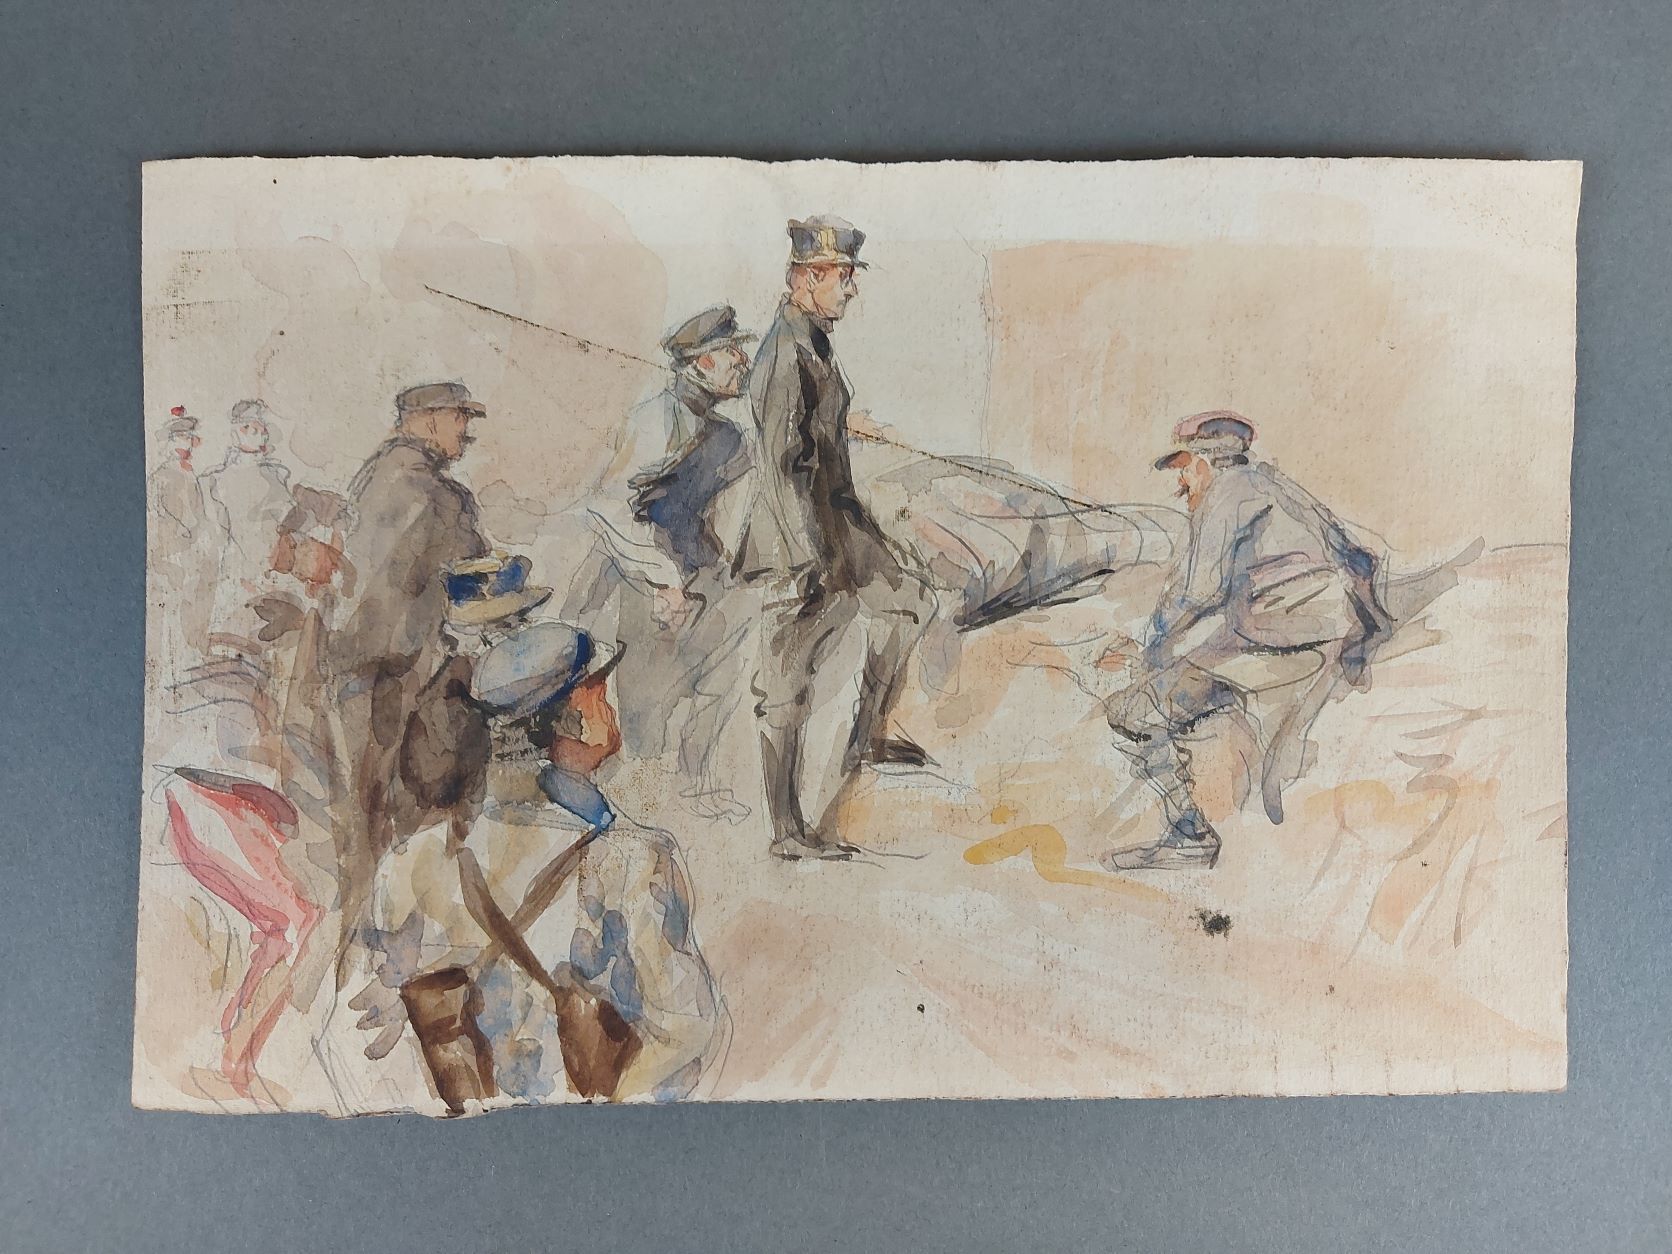 Null 
查尔斯-莫罗-沃特希尔 (1857-1924)

第一次世界大战的士兵们

纸上铅笔线条的水彩画，背面有查尔斯-莫罗-沃特希尔遗产的印章

16 x&hellip;